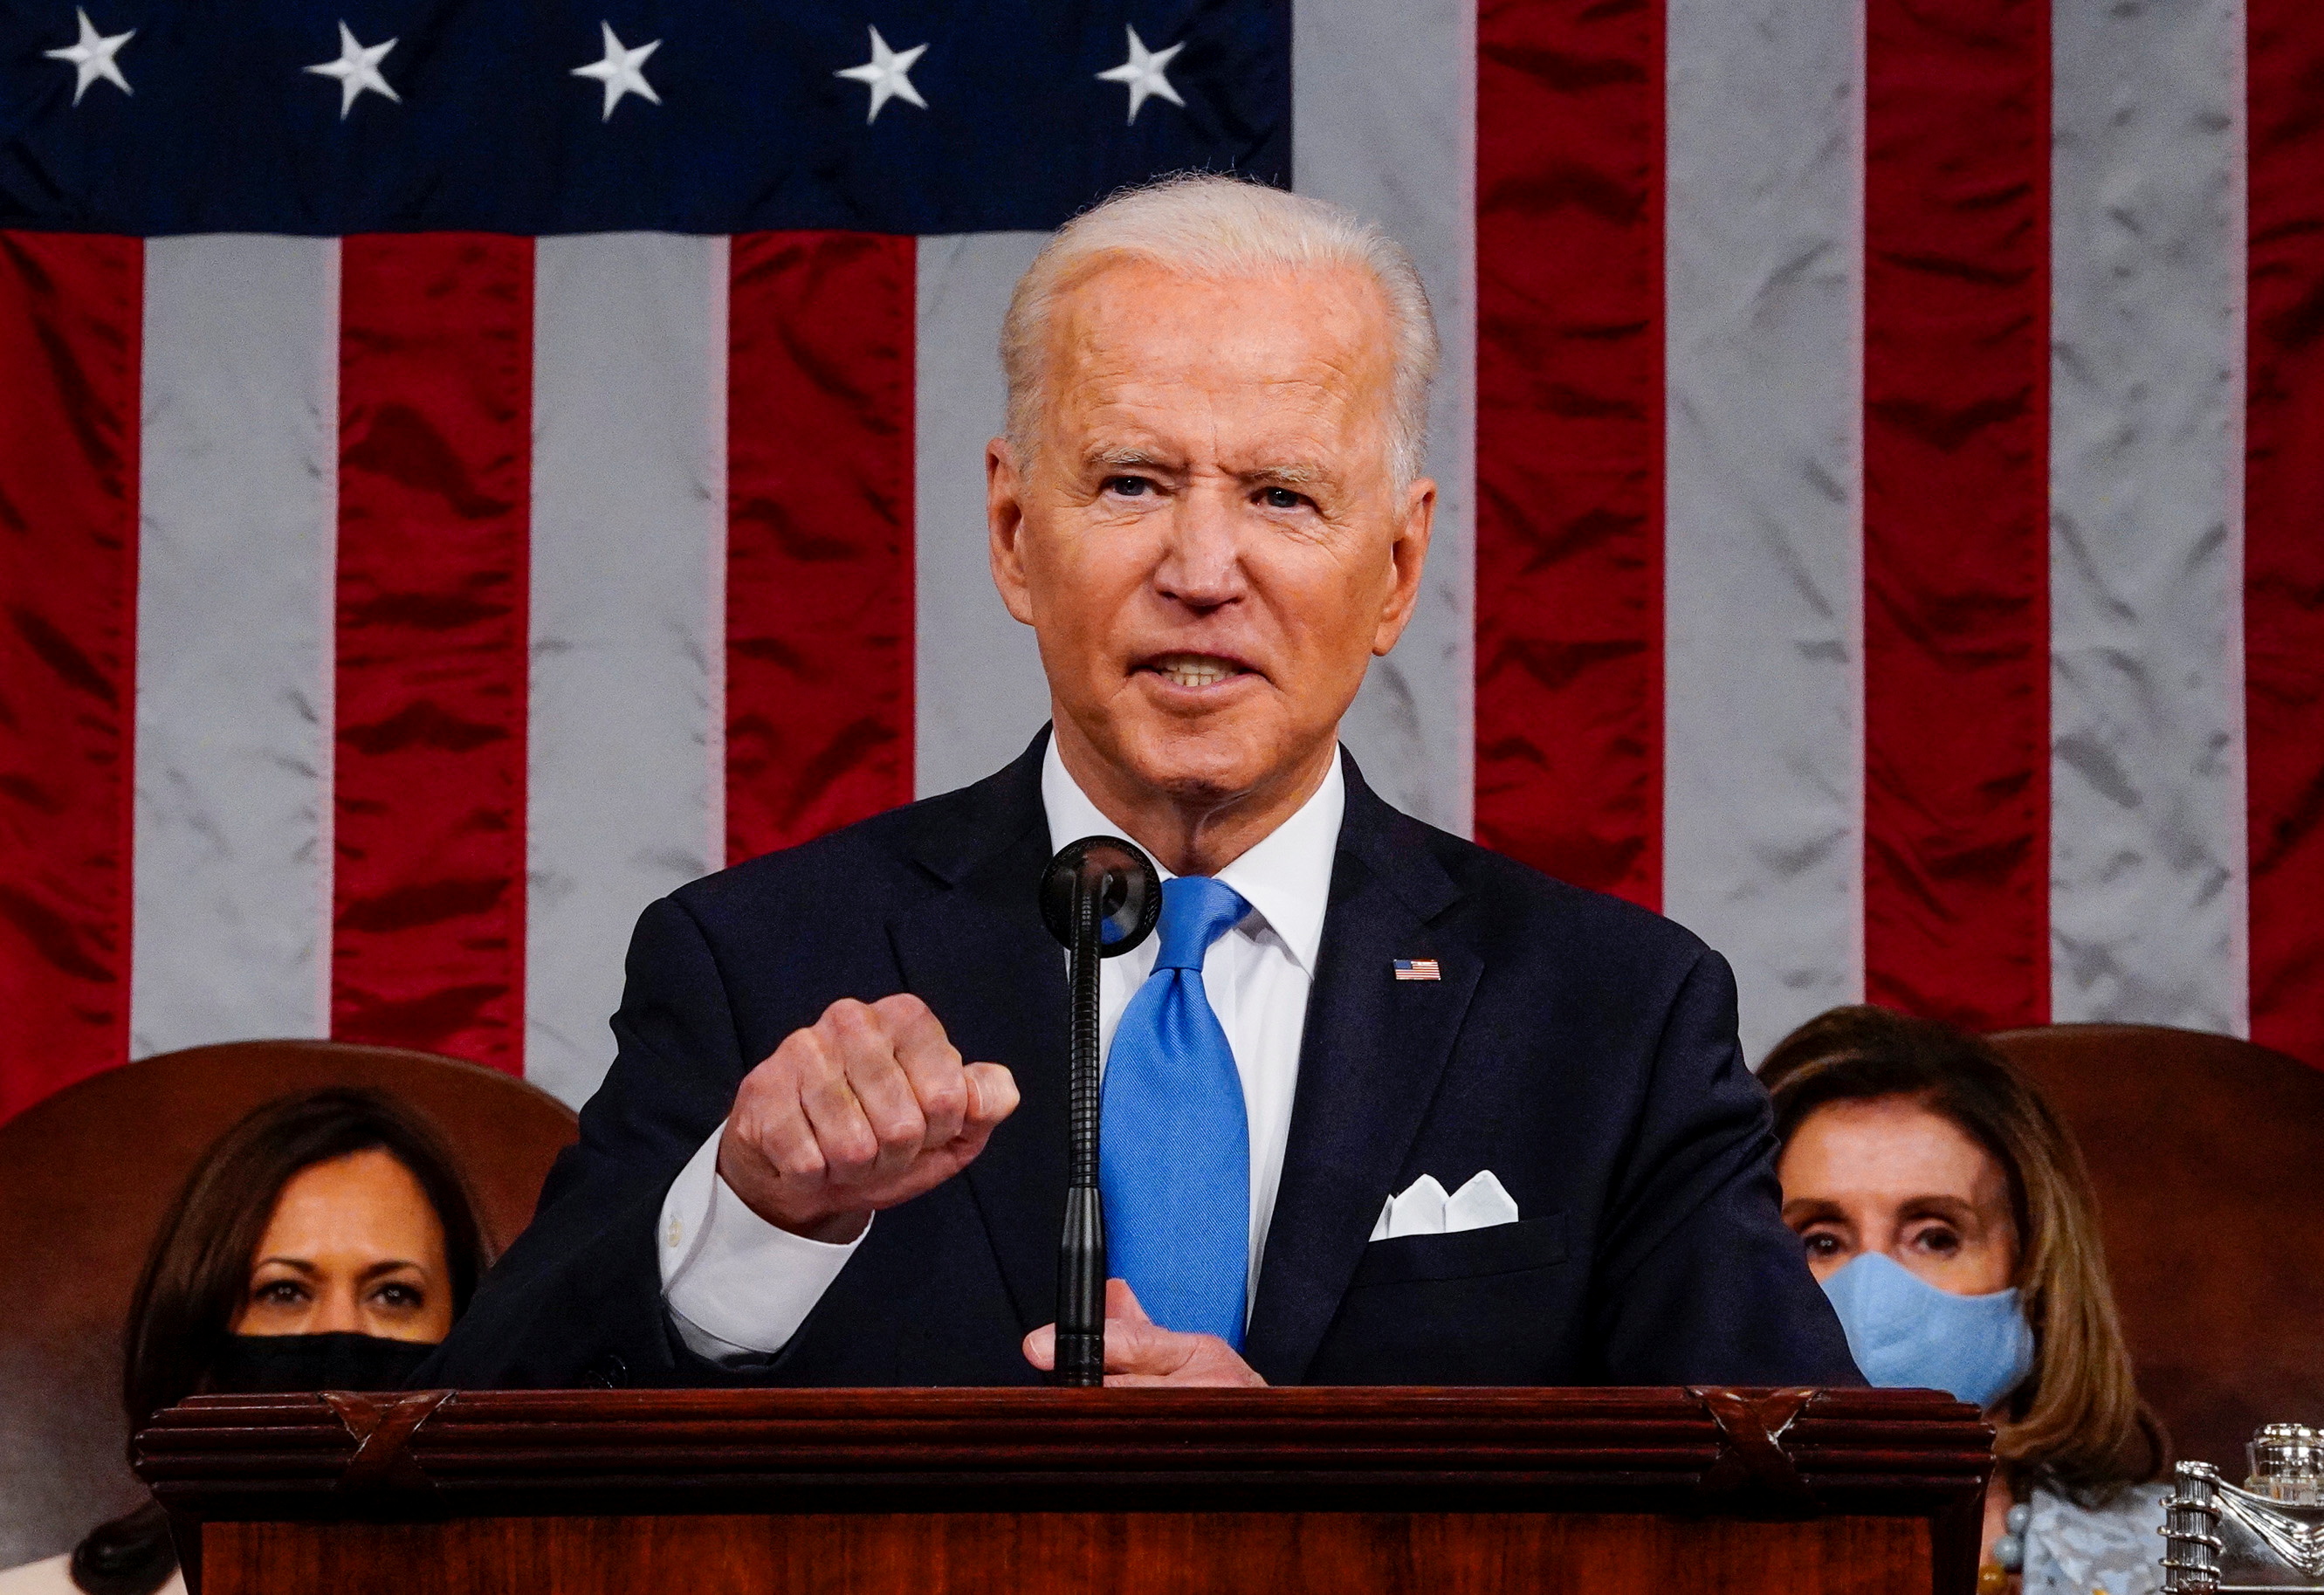 U.S. President Joe Biden's first address to a joint session of Congress